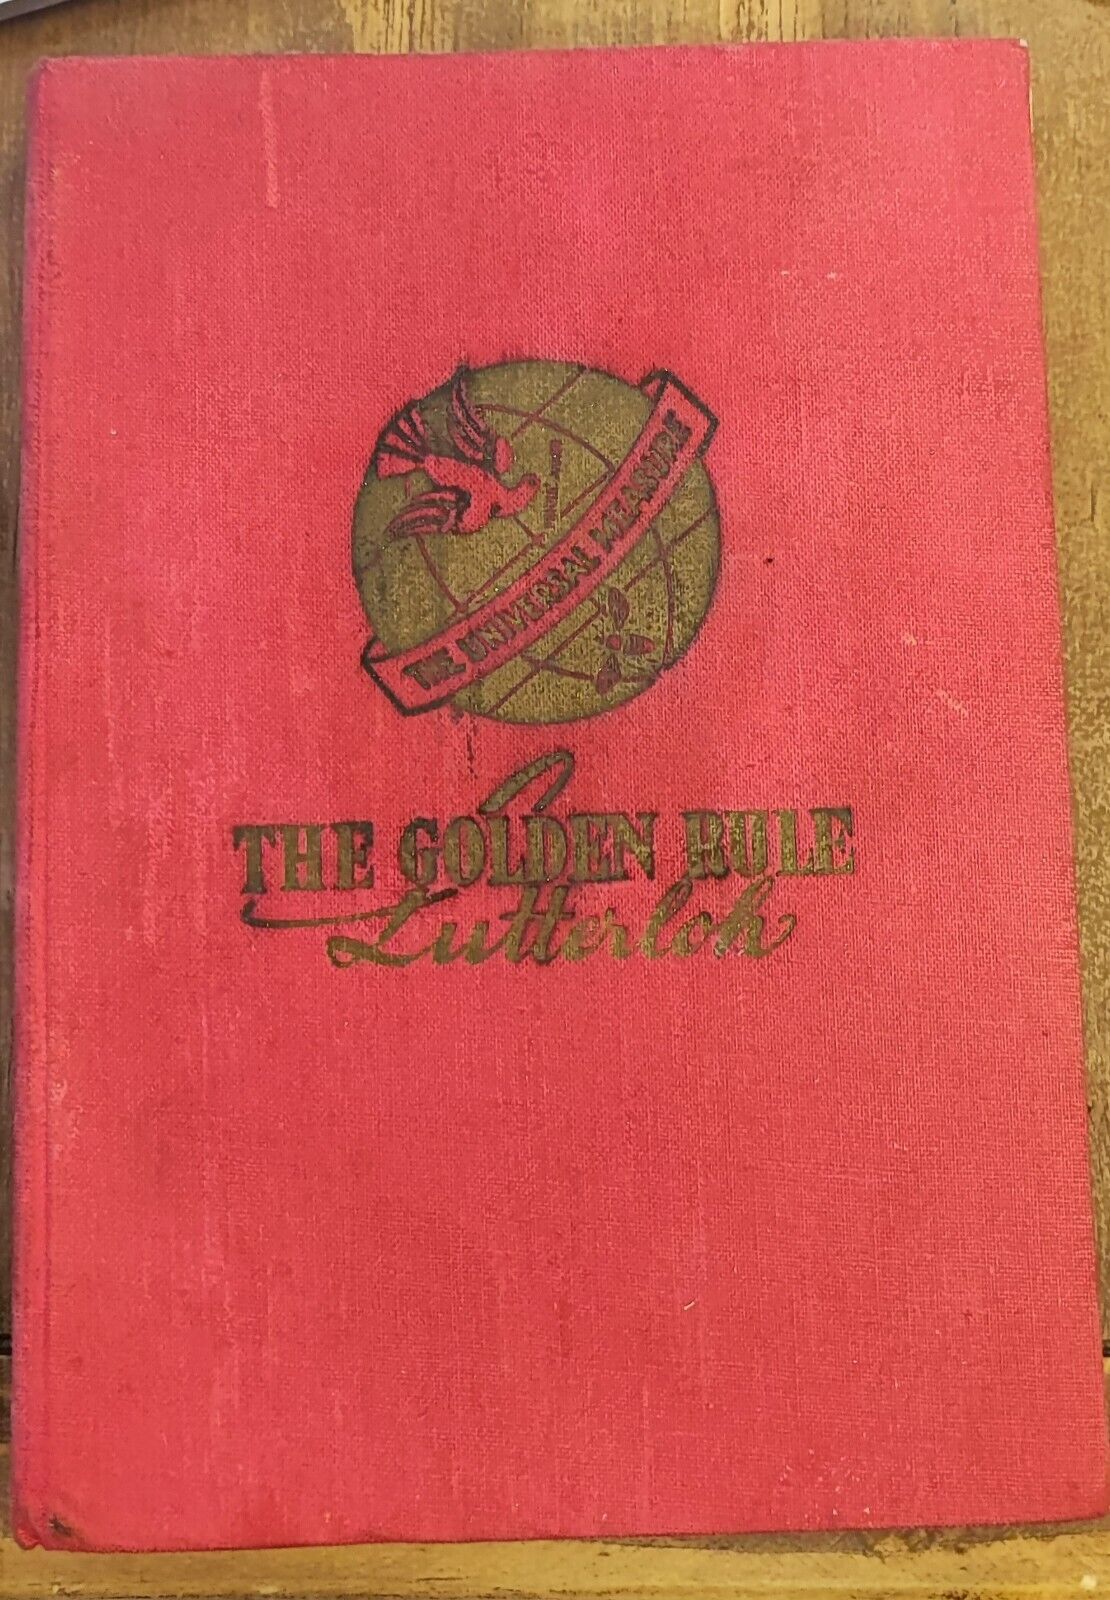 The Golden Rule 1954 Lutterloh - a very rare find